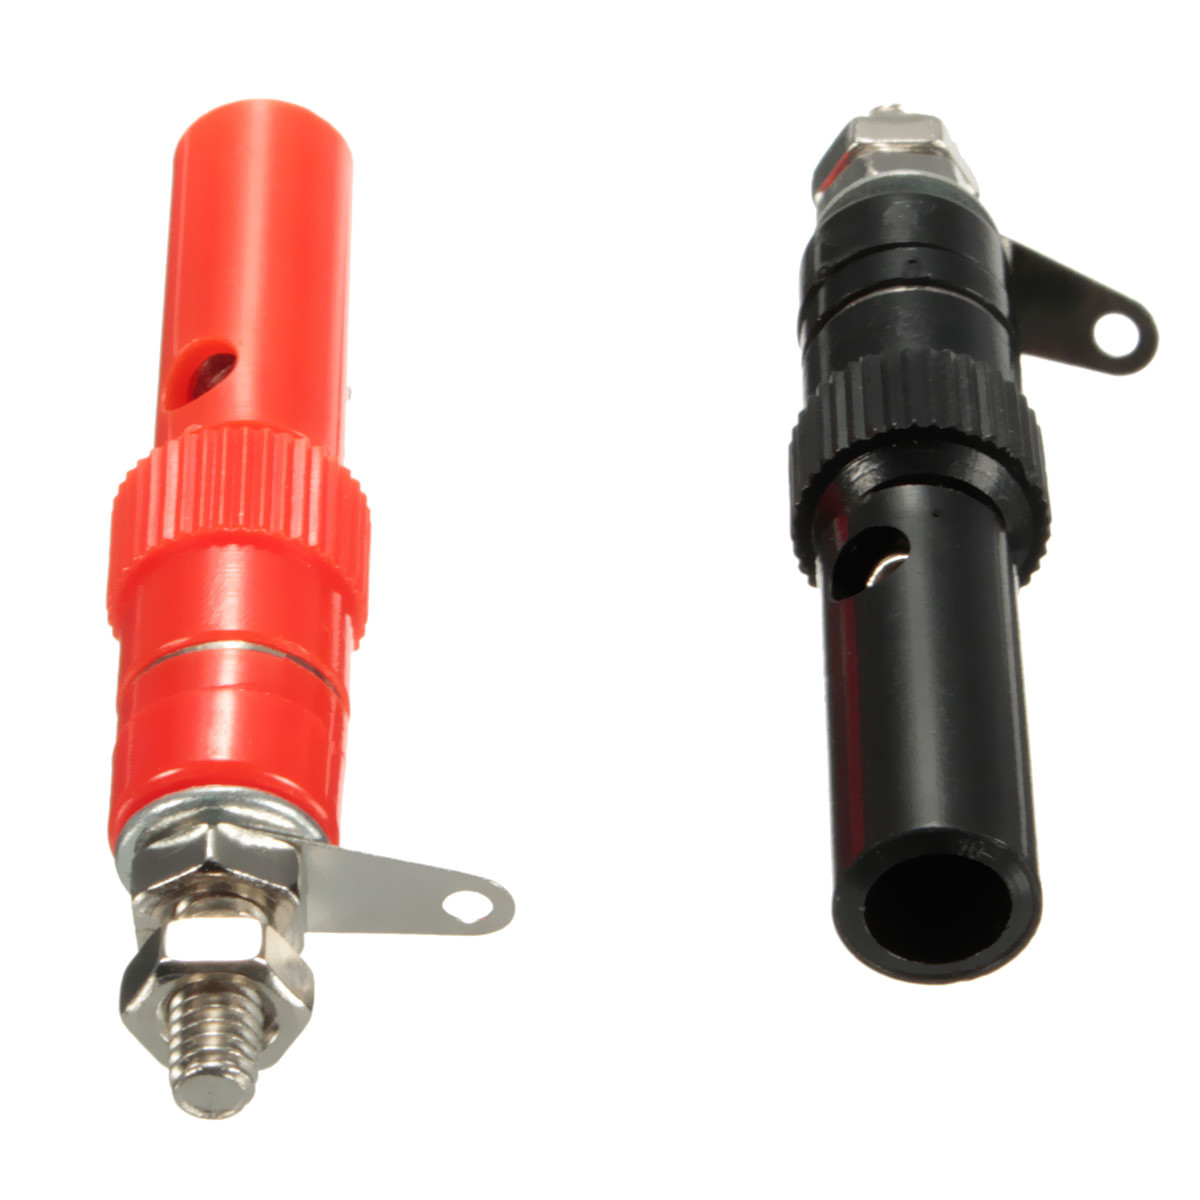 DANIU-50-Pairs-4mm-Terminal-Banana-Plug-Socket-Jack-Connectors-Instrument-Light-Tools-Black-and-Red-1358118-7